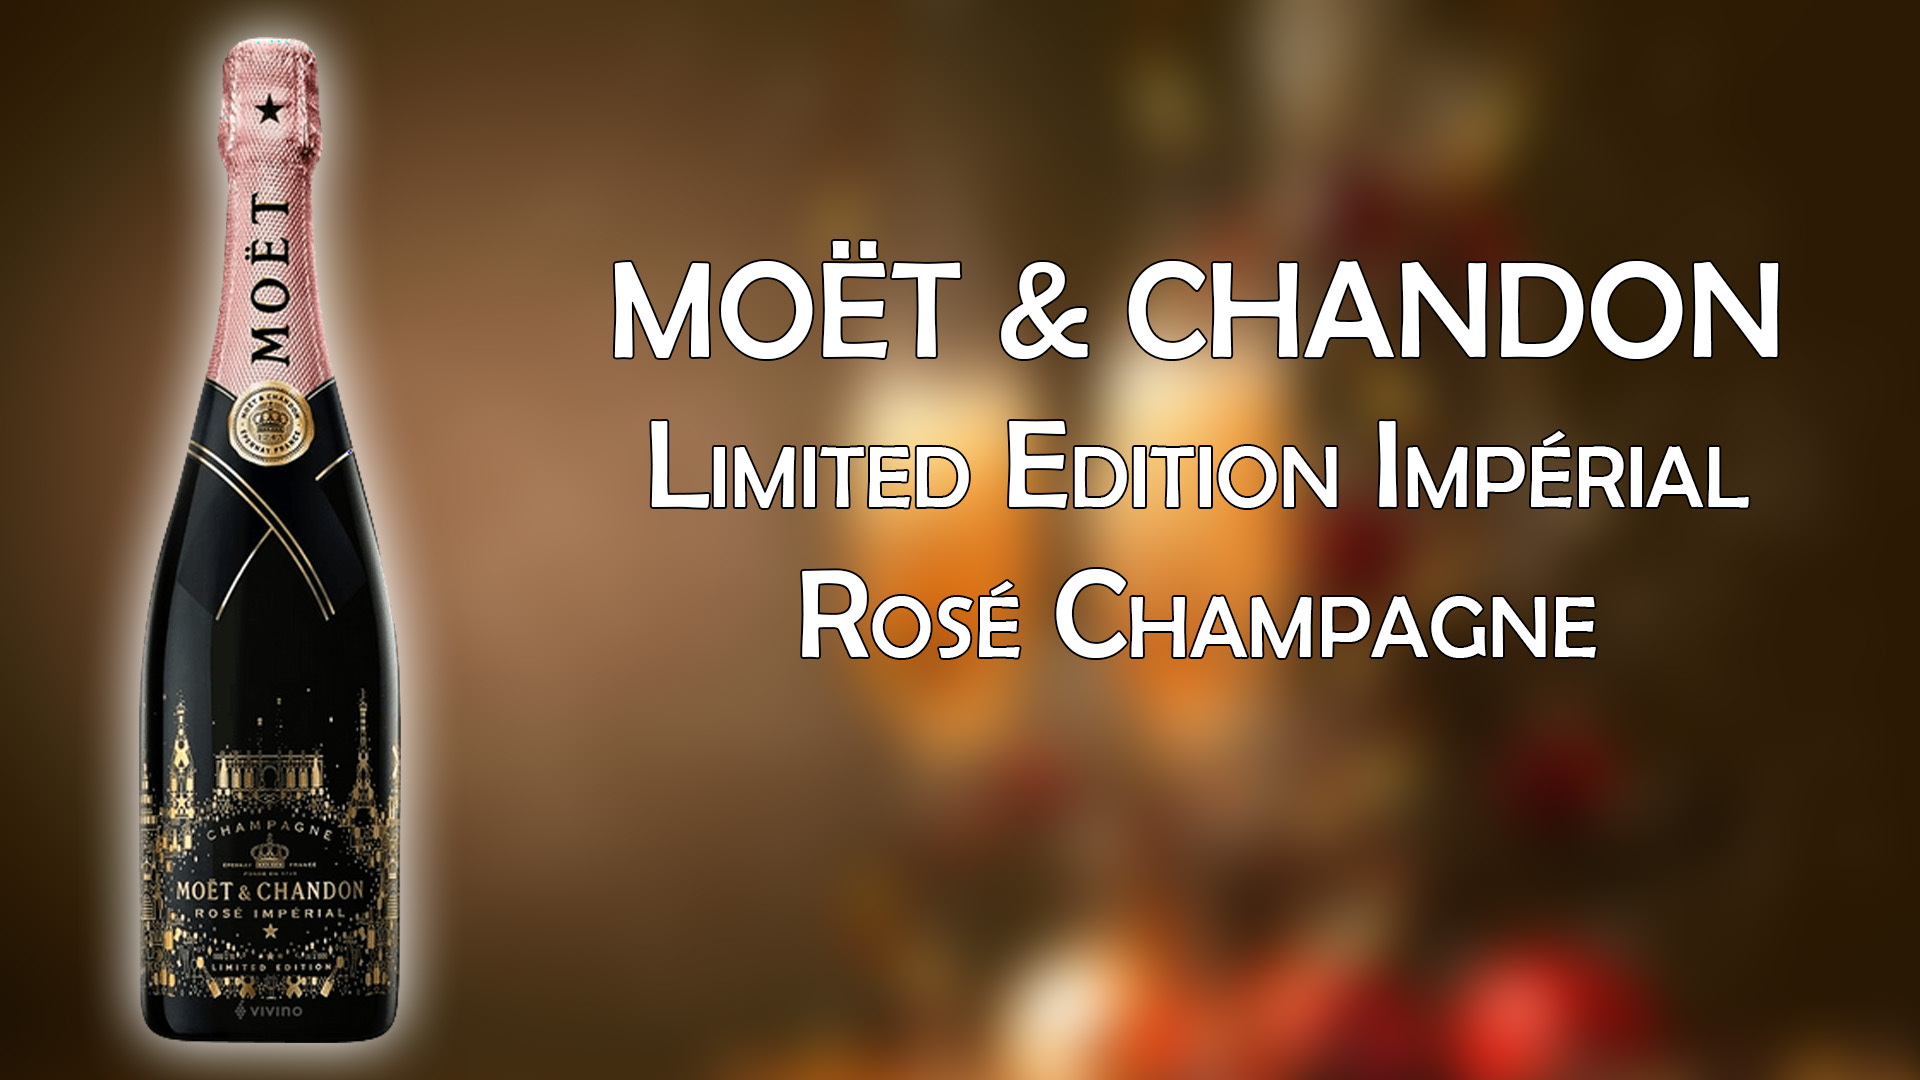 Moët & Chandon Limited Edition Impérial Rosé Champagne - Best Decorated Bottle for Christmas